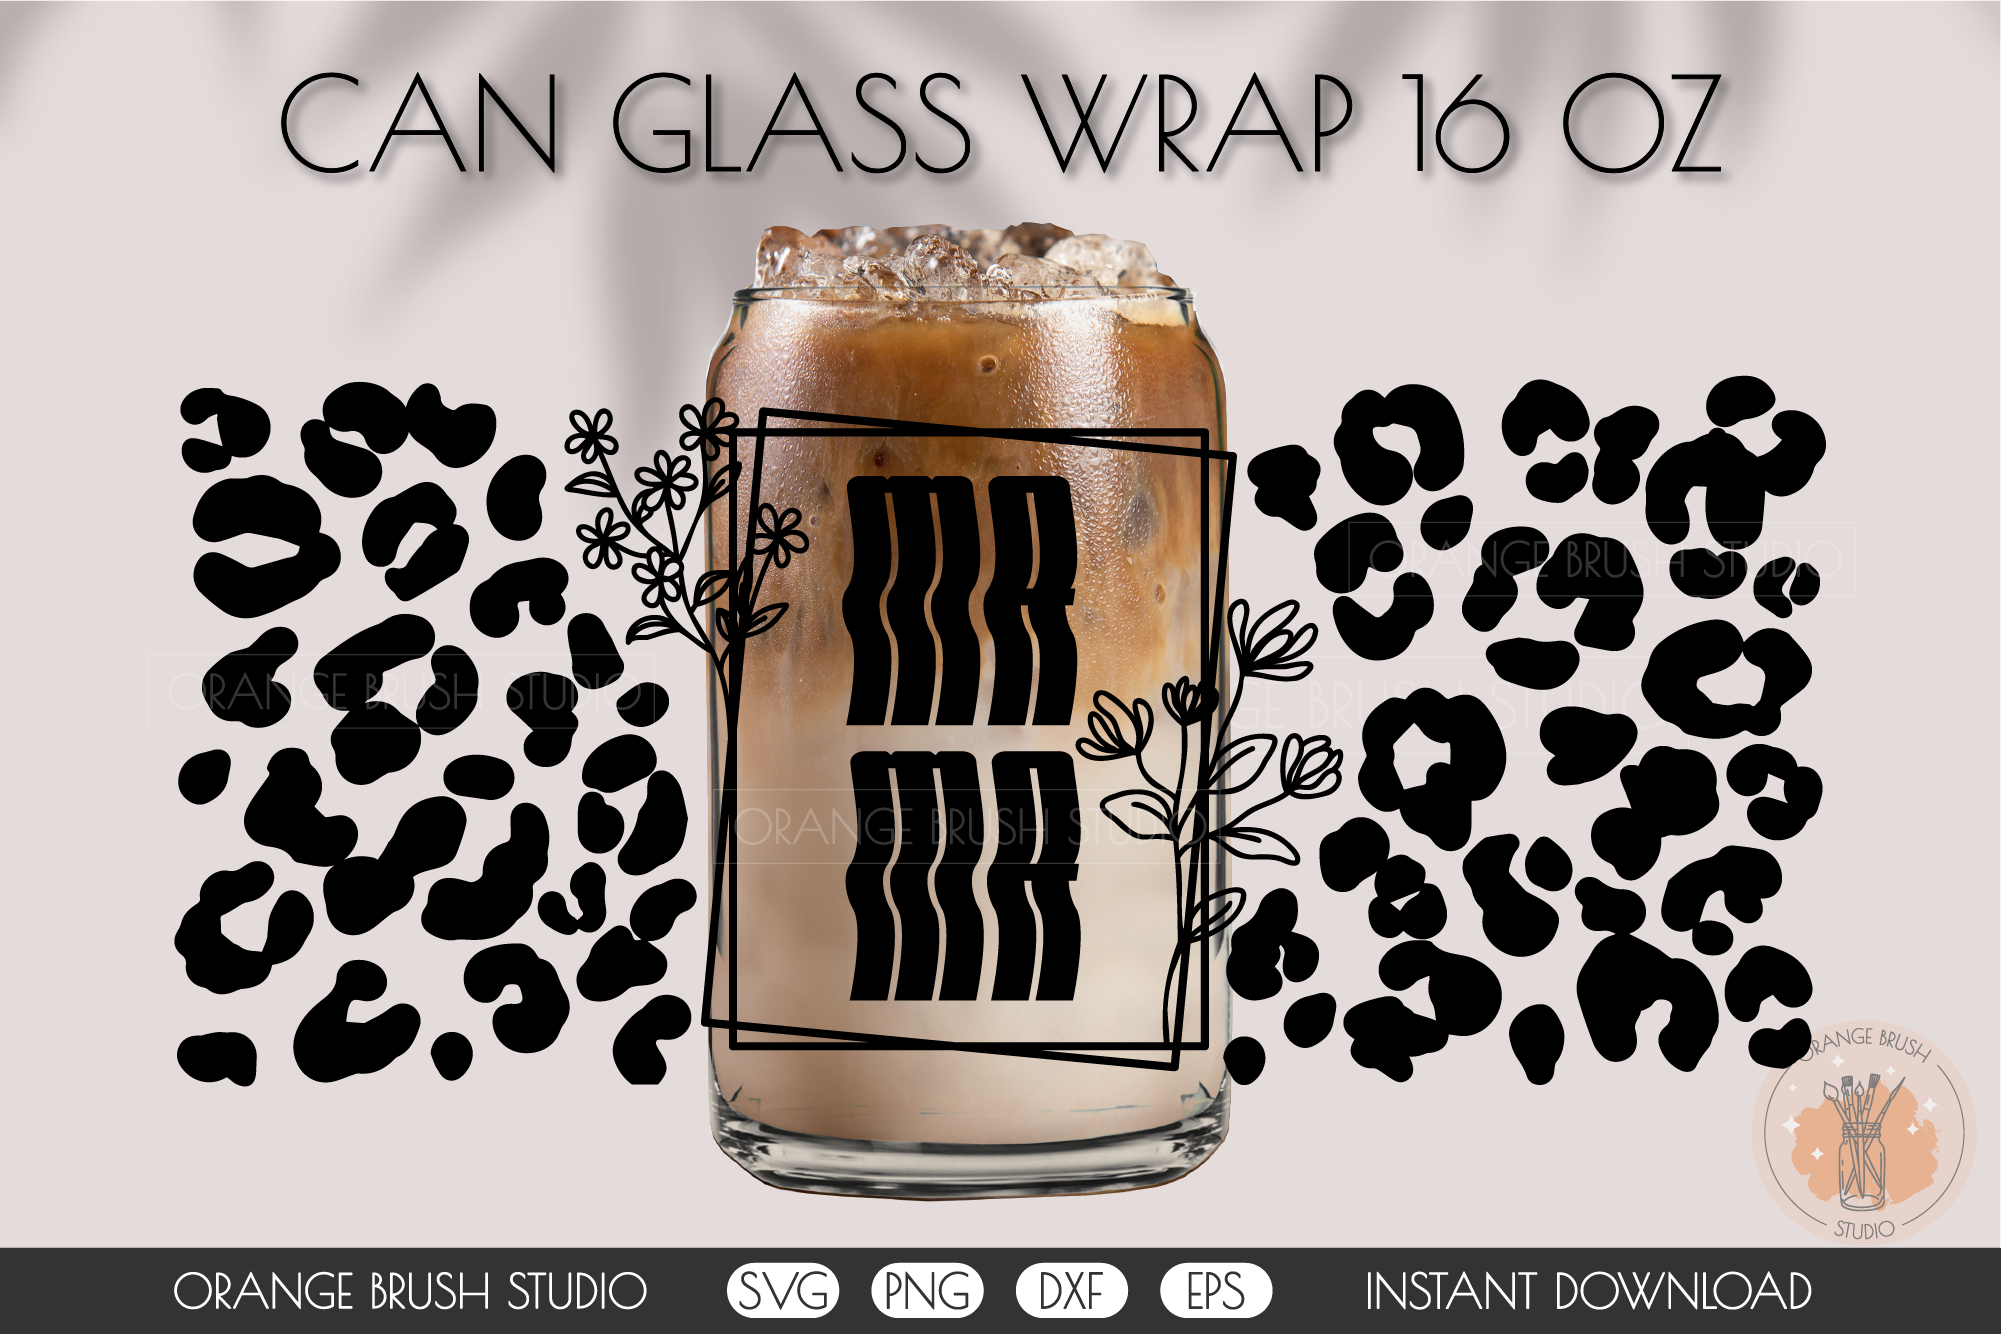 16oz Libbey Glass Can Mockup - Digital Download Glass Mockup - Wrap Libbey  Mock Up - Glass cup can Template